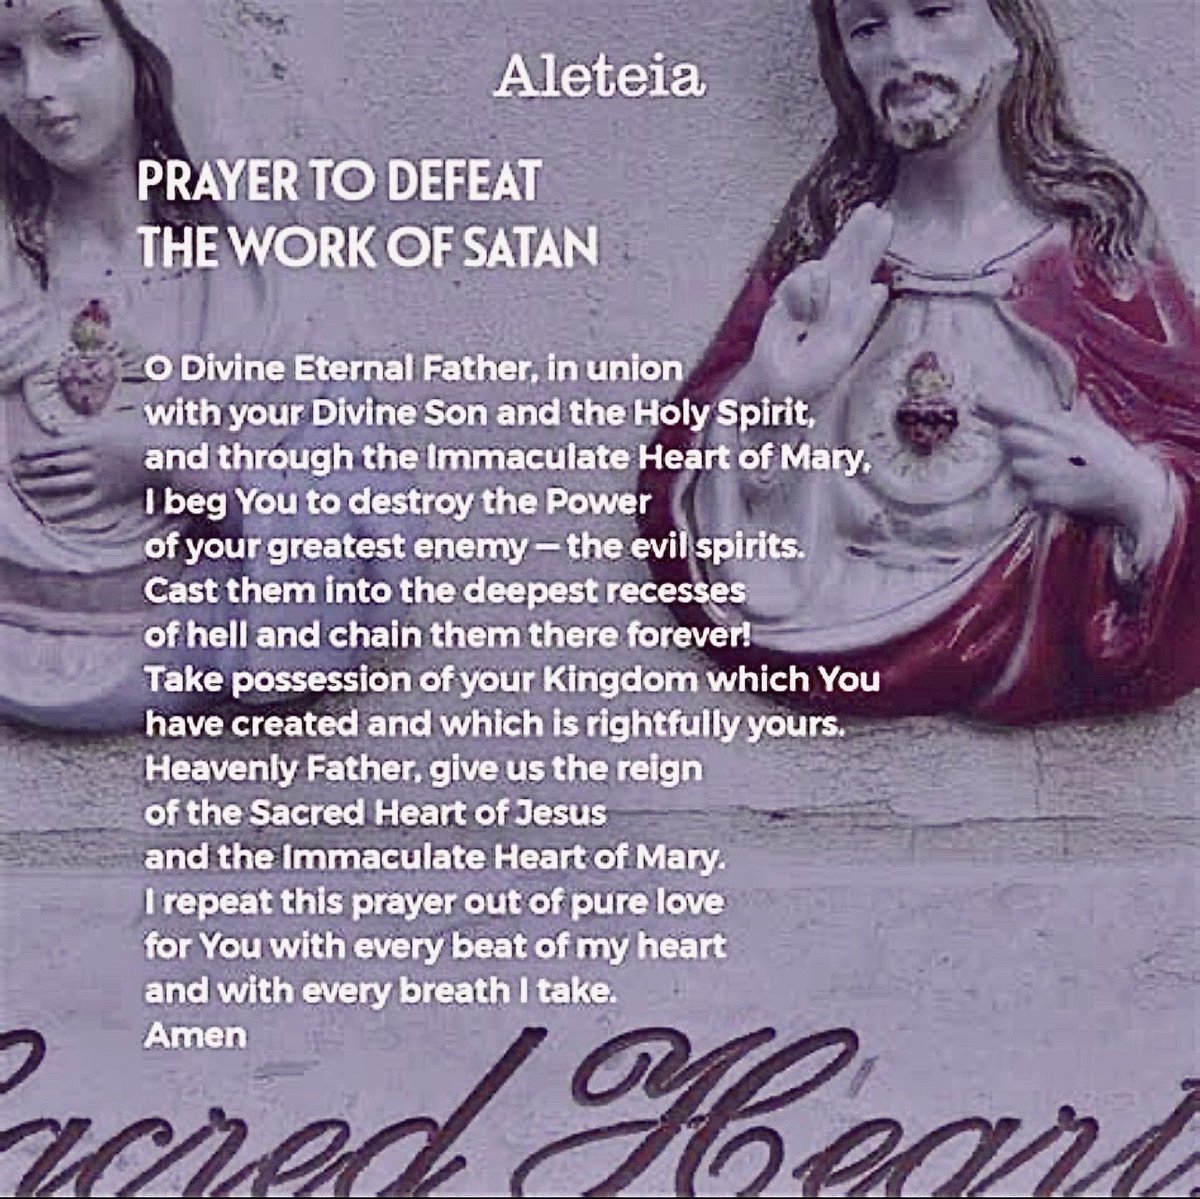 A Prayer to Defeat the Work of satan~
🙏🏻🙏🏻🙏🏻